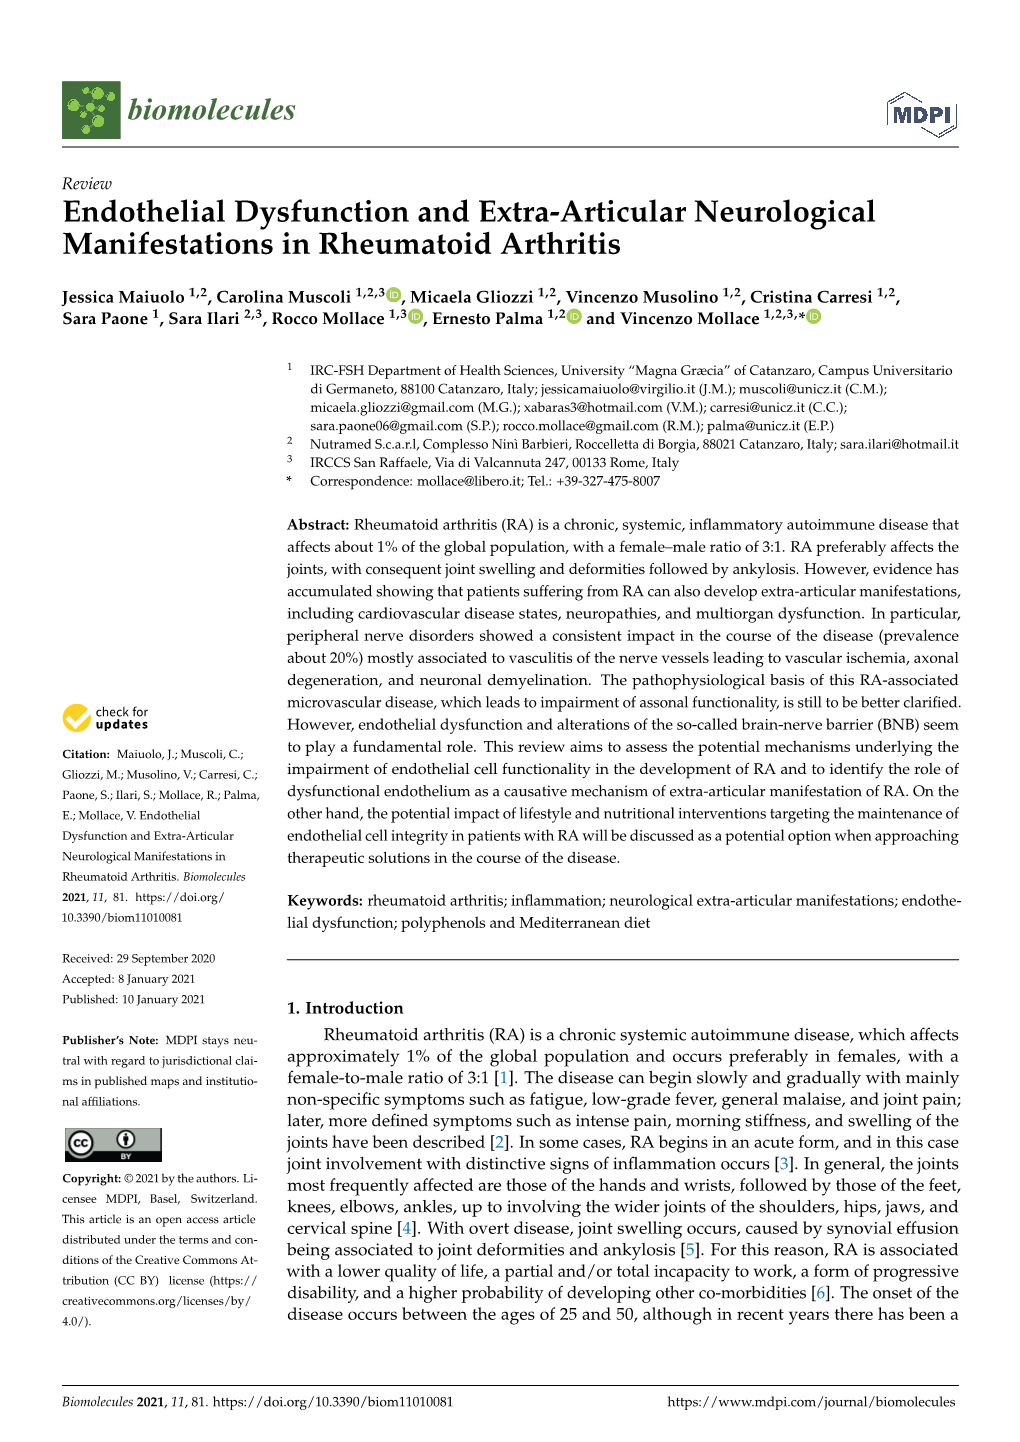 Endothelial Dysfunction and Extra-Articular Neurological Manifestations in Rheumatoid Arthritis